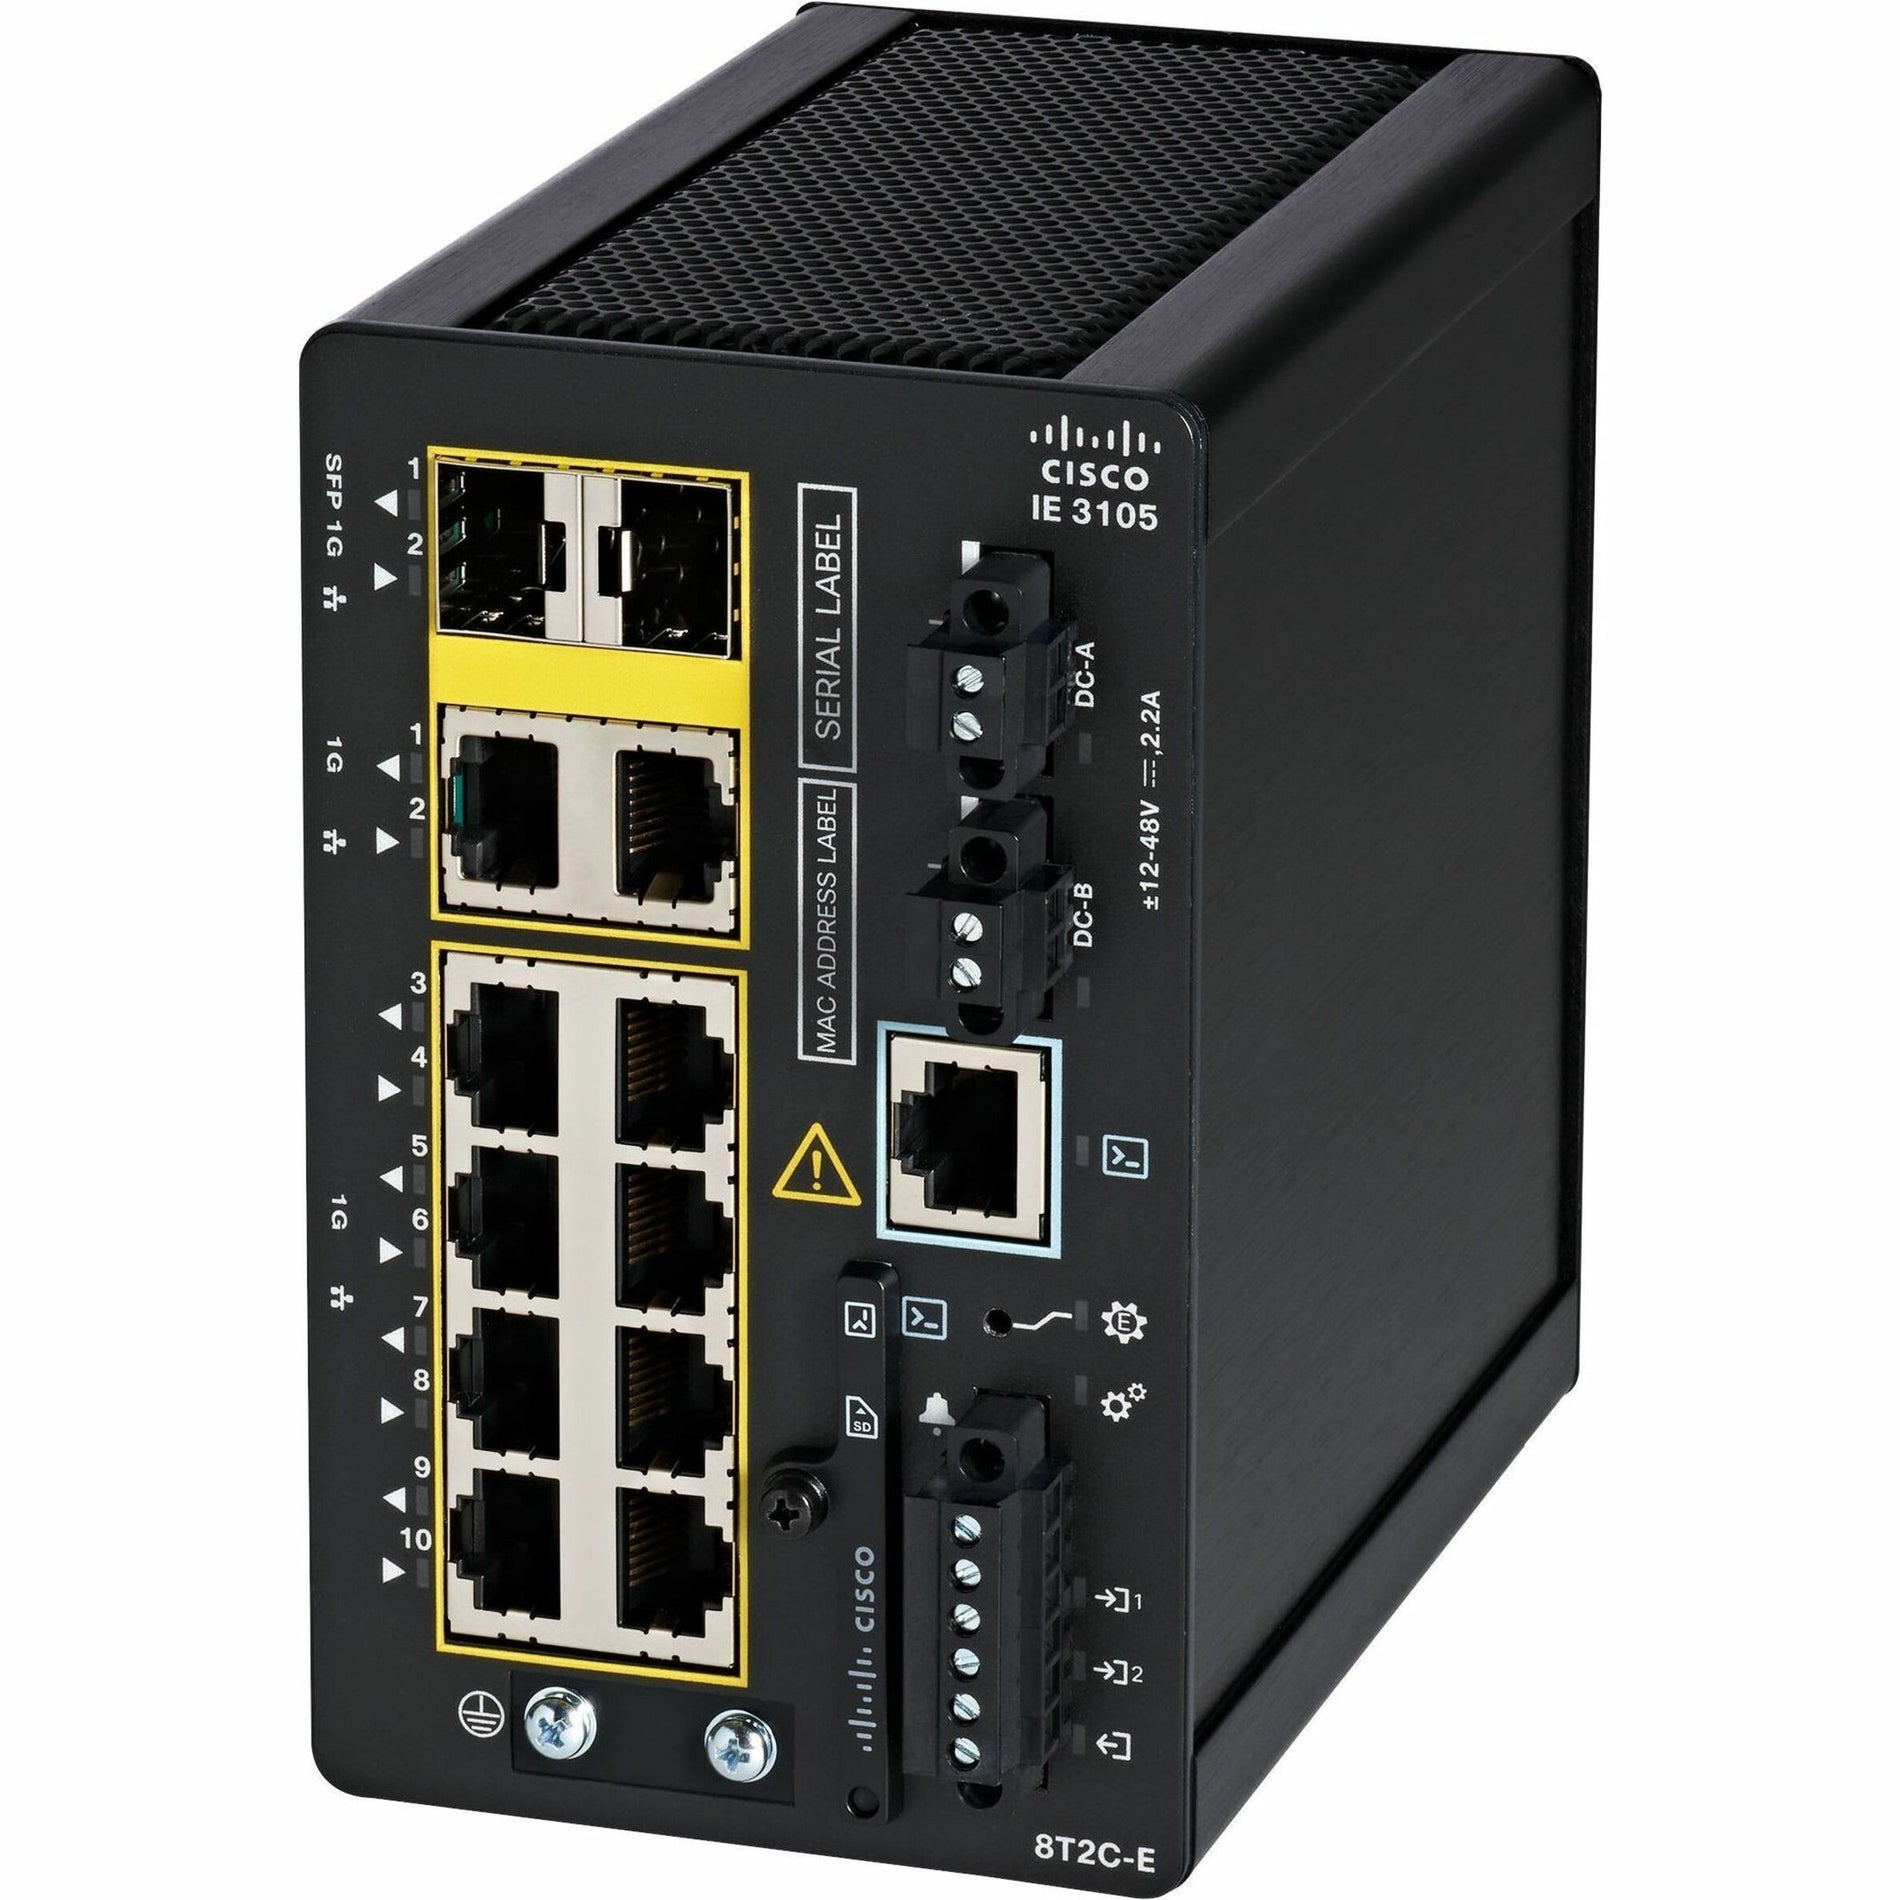 Cisco IE-3105-8T2C-E Catalyst IE3100 Rugged Ethernet Switch, 10 Gigabit Ethernet Network, 2 x Gigabit Ethernet Combo Uplink, DIN Rail Mountable